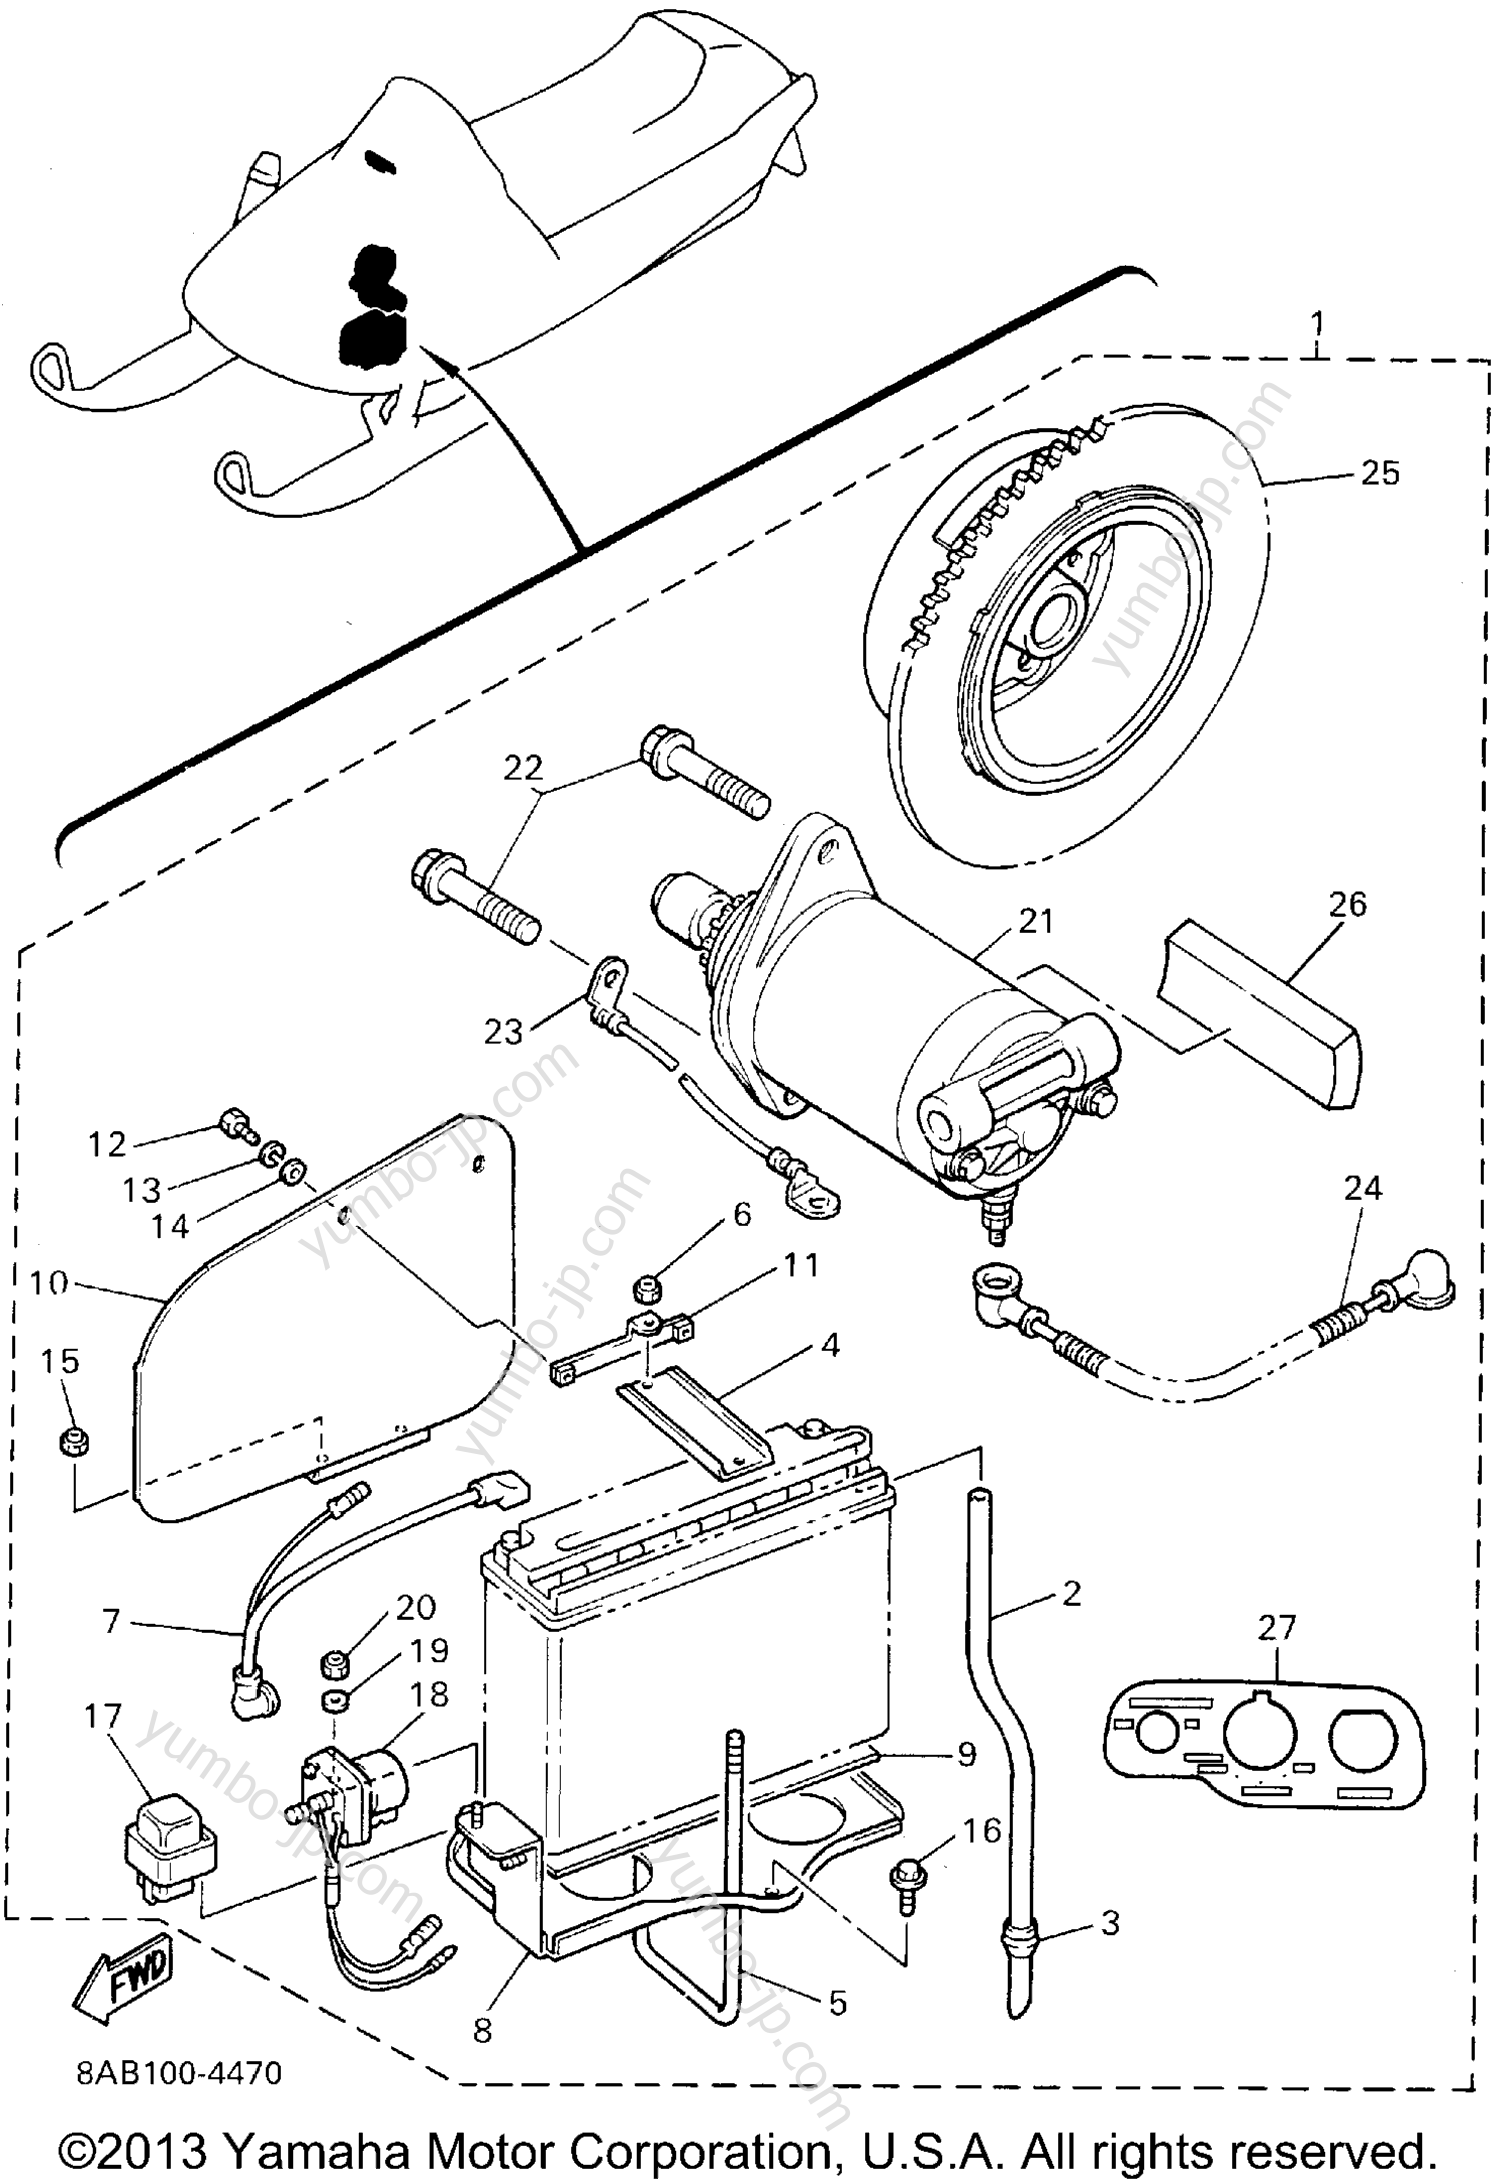 Electric Start Kit (Alternate) for snowmobiles YAMAHA VMAX 600 DX (VX600DXU) 1994 year